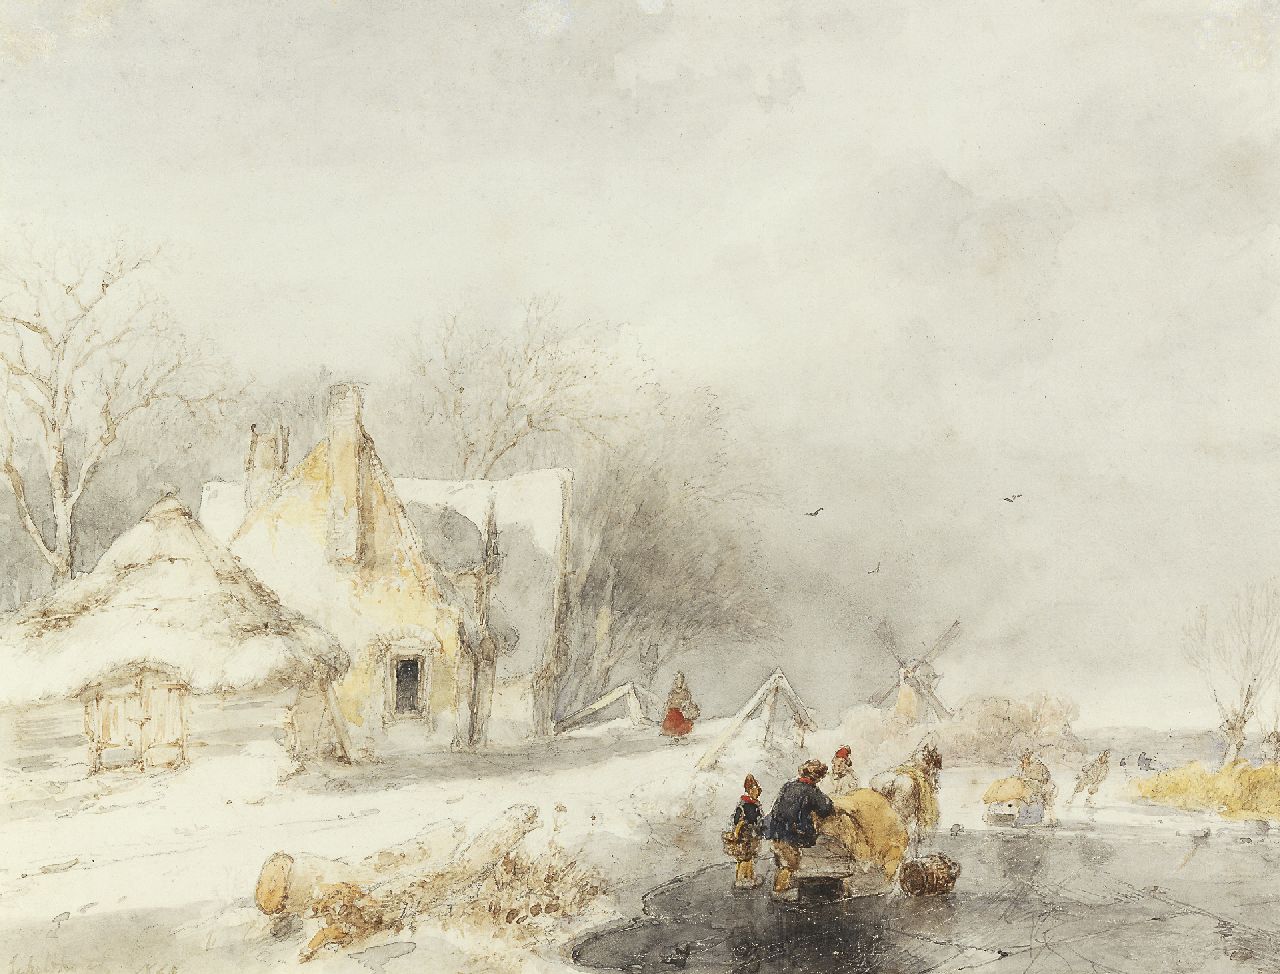 Schelfhout A.  | Andreas Schelfhout, Skaters in a frozen winter landscape, Aquarell auf Papier 20,9 x 26,4 cm, signed l.l. und painted 1848